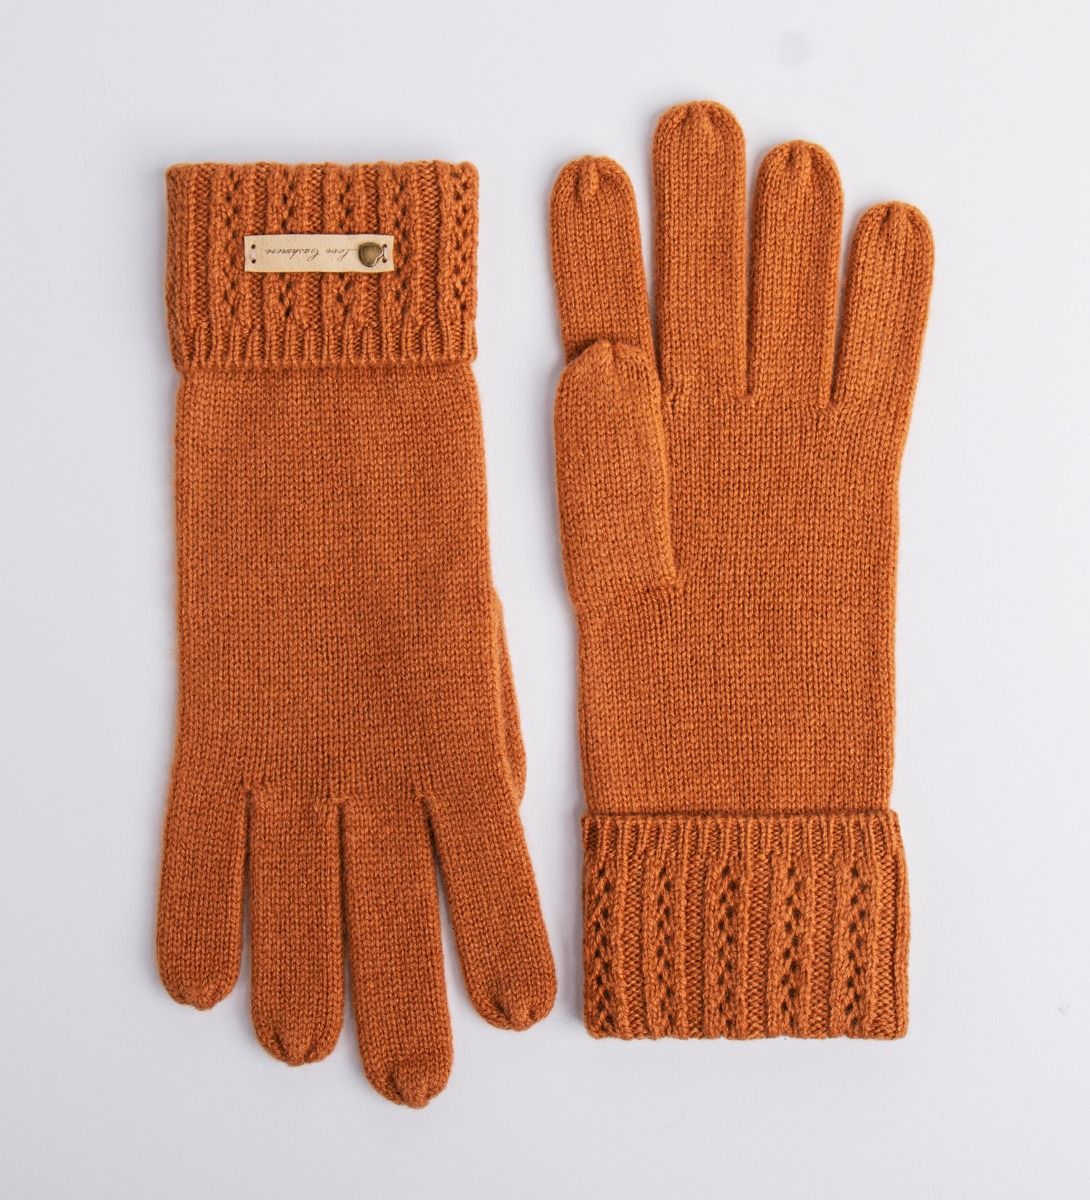 LEEZ Women Cashmere Folded Cuffs Knit Gloves